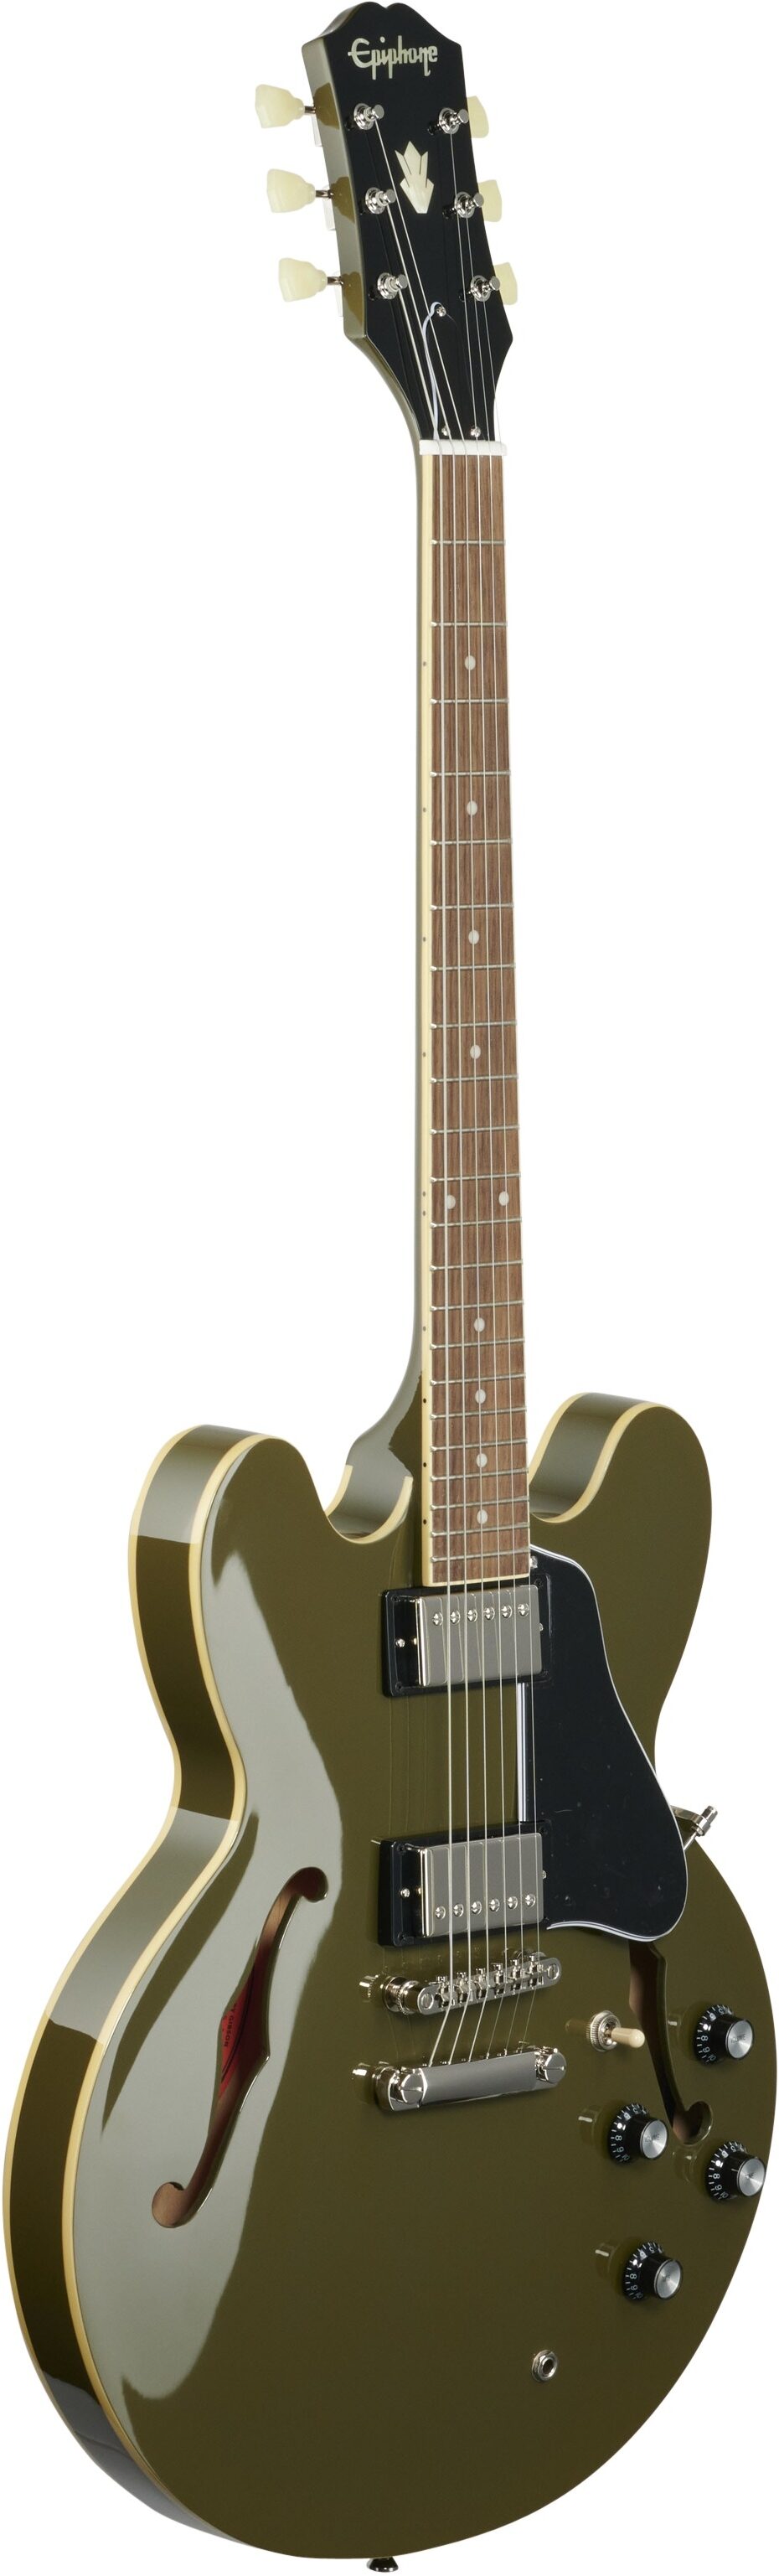 Epiphone Exclusive ES-335 Electric Guitar